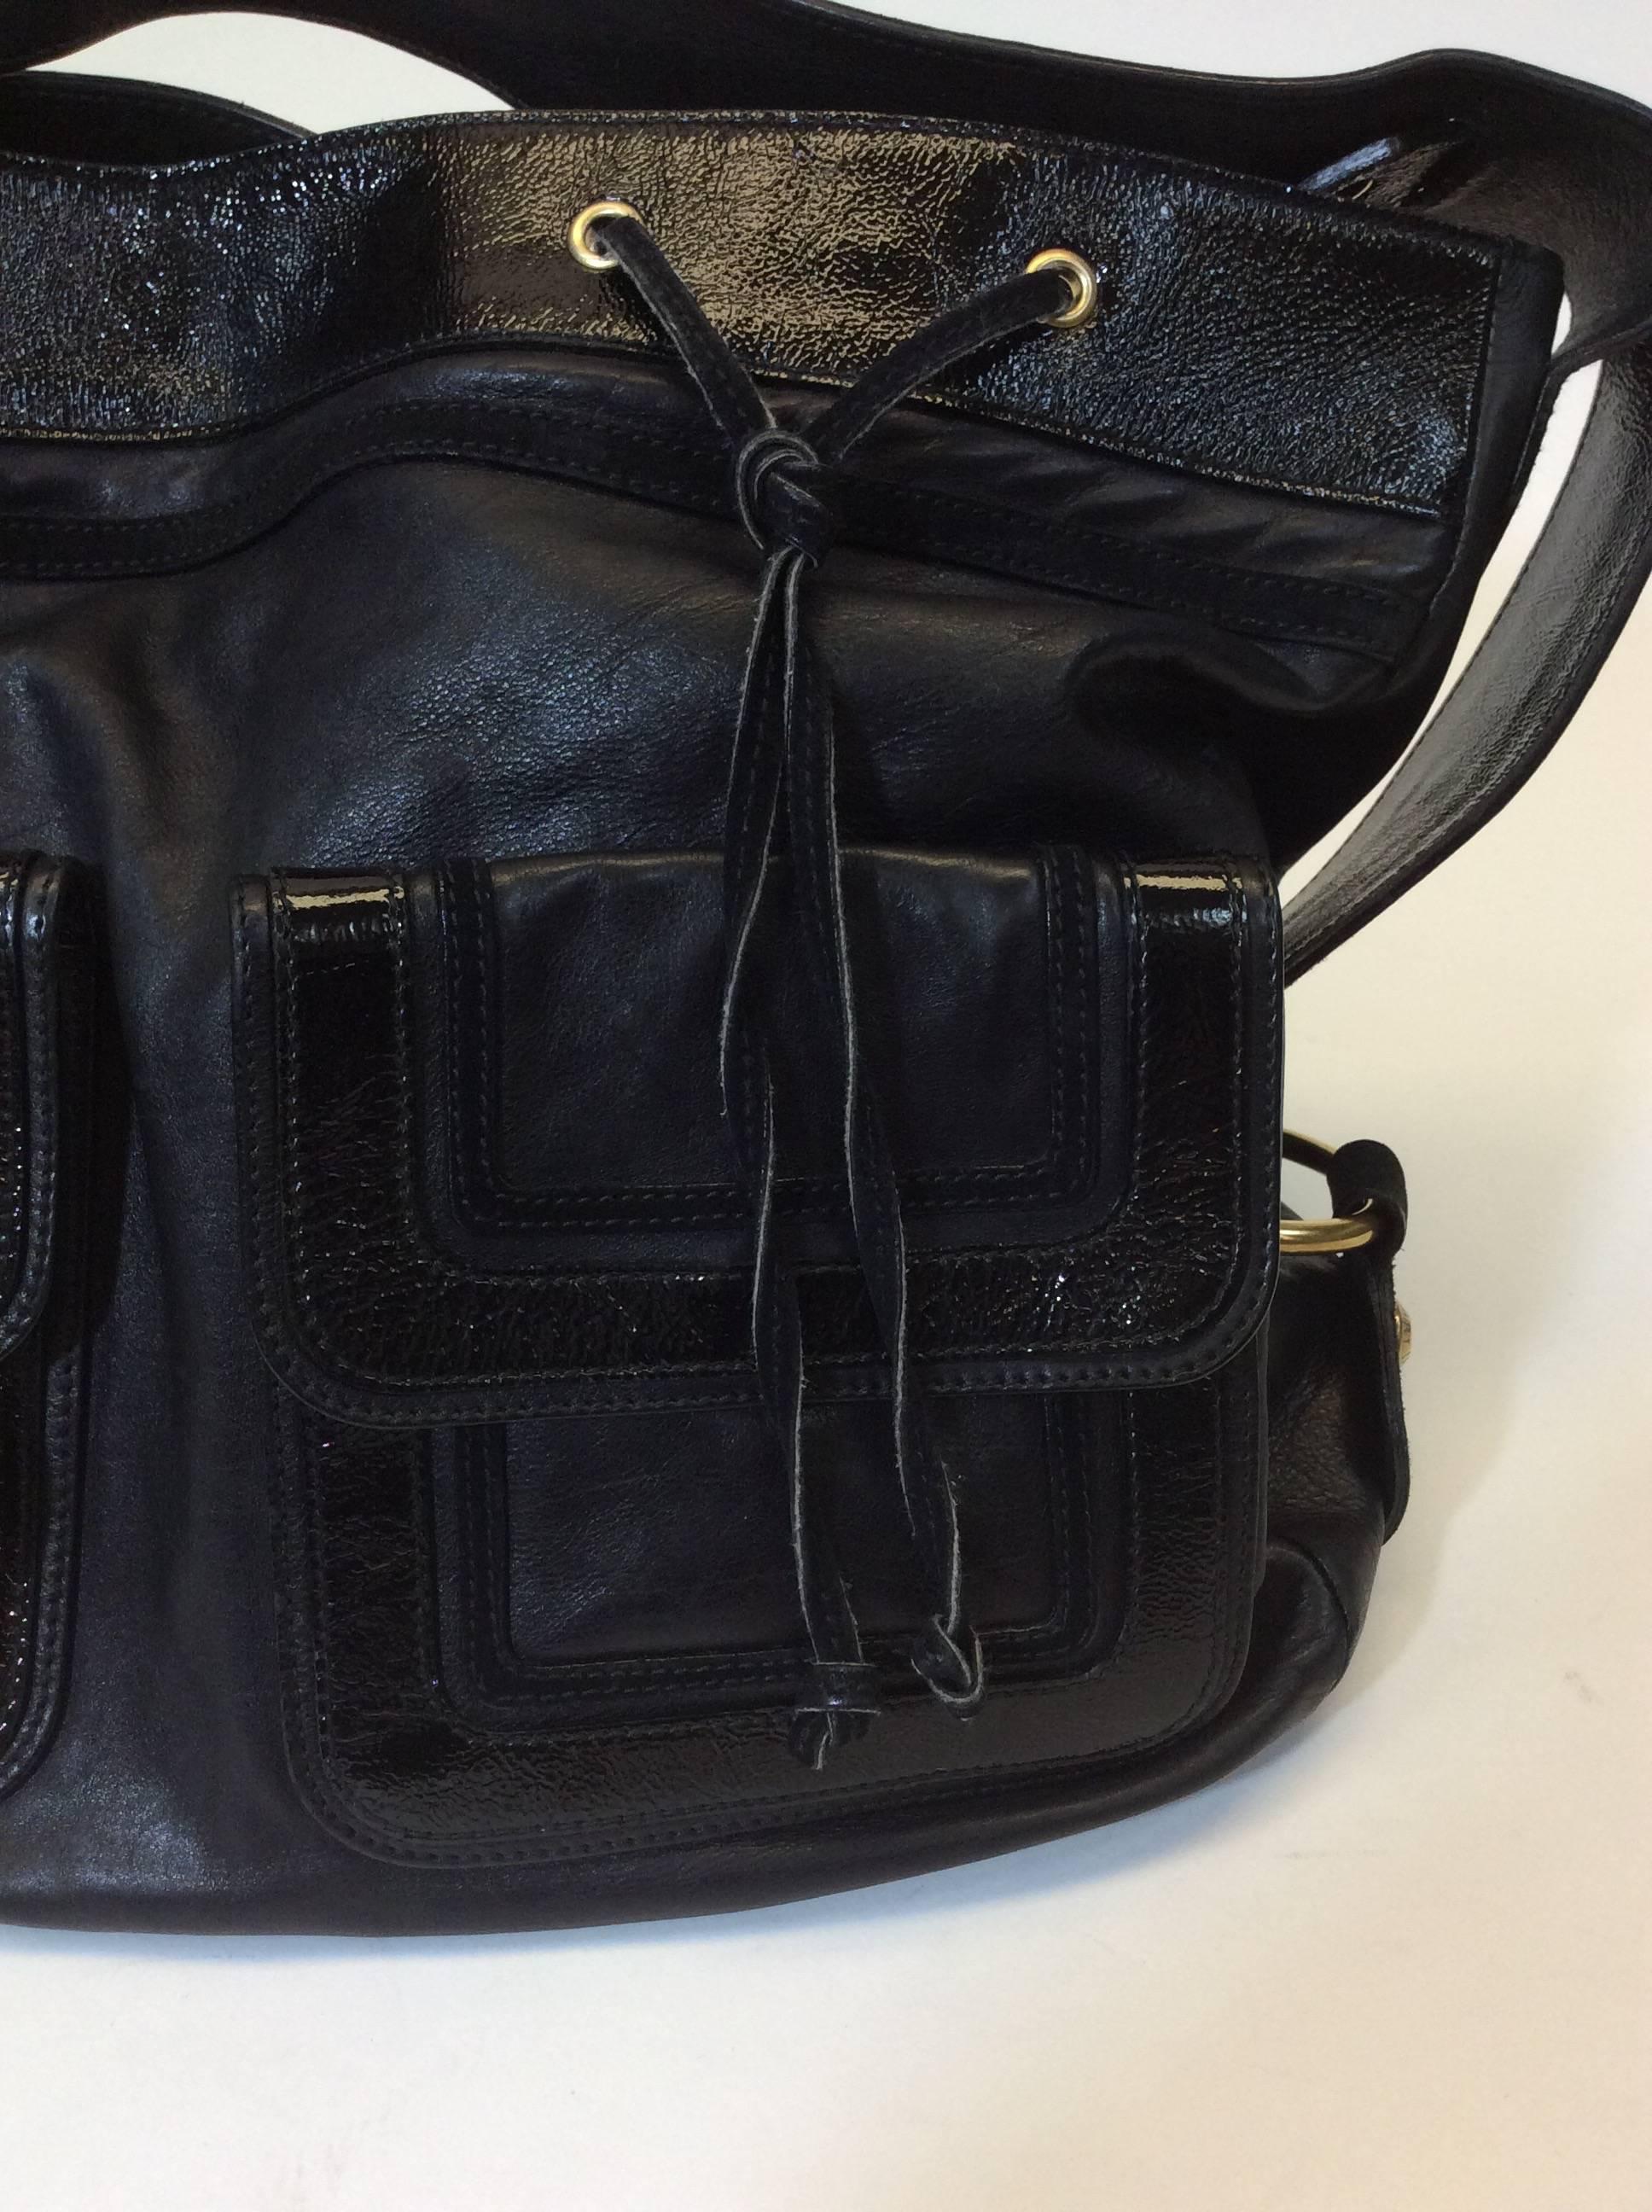 Yves Saint Laurent Black Leather and Suede Handbag 1